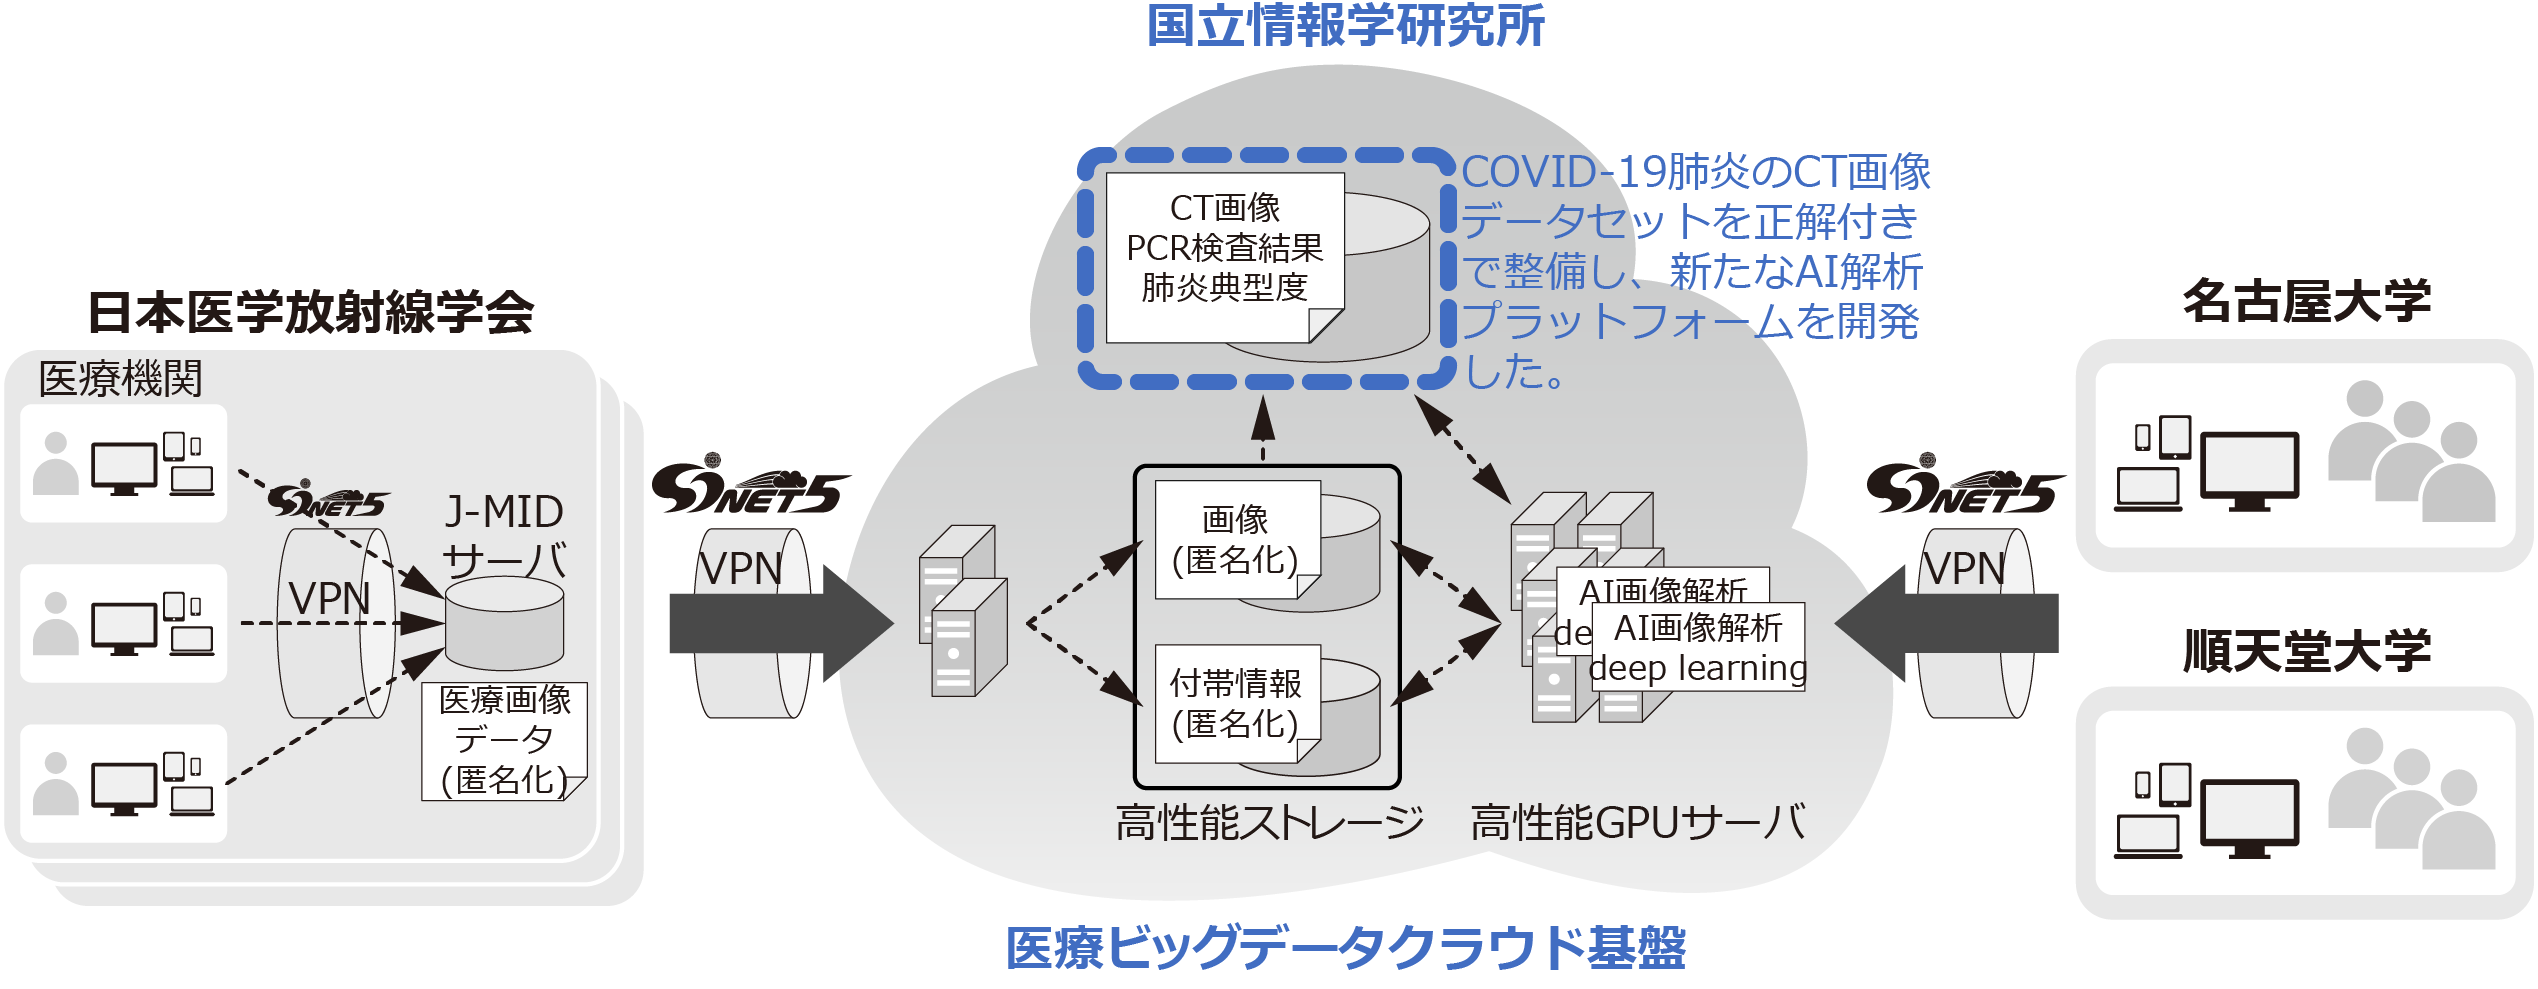 Cloud platform for COVID-19